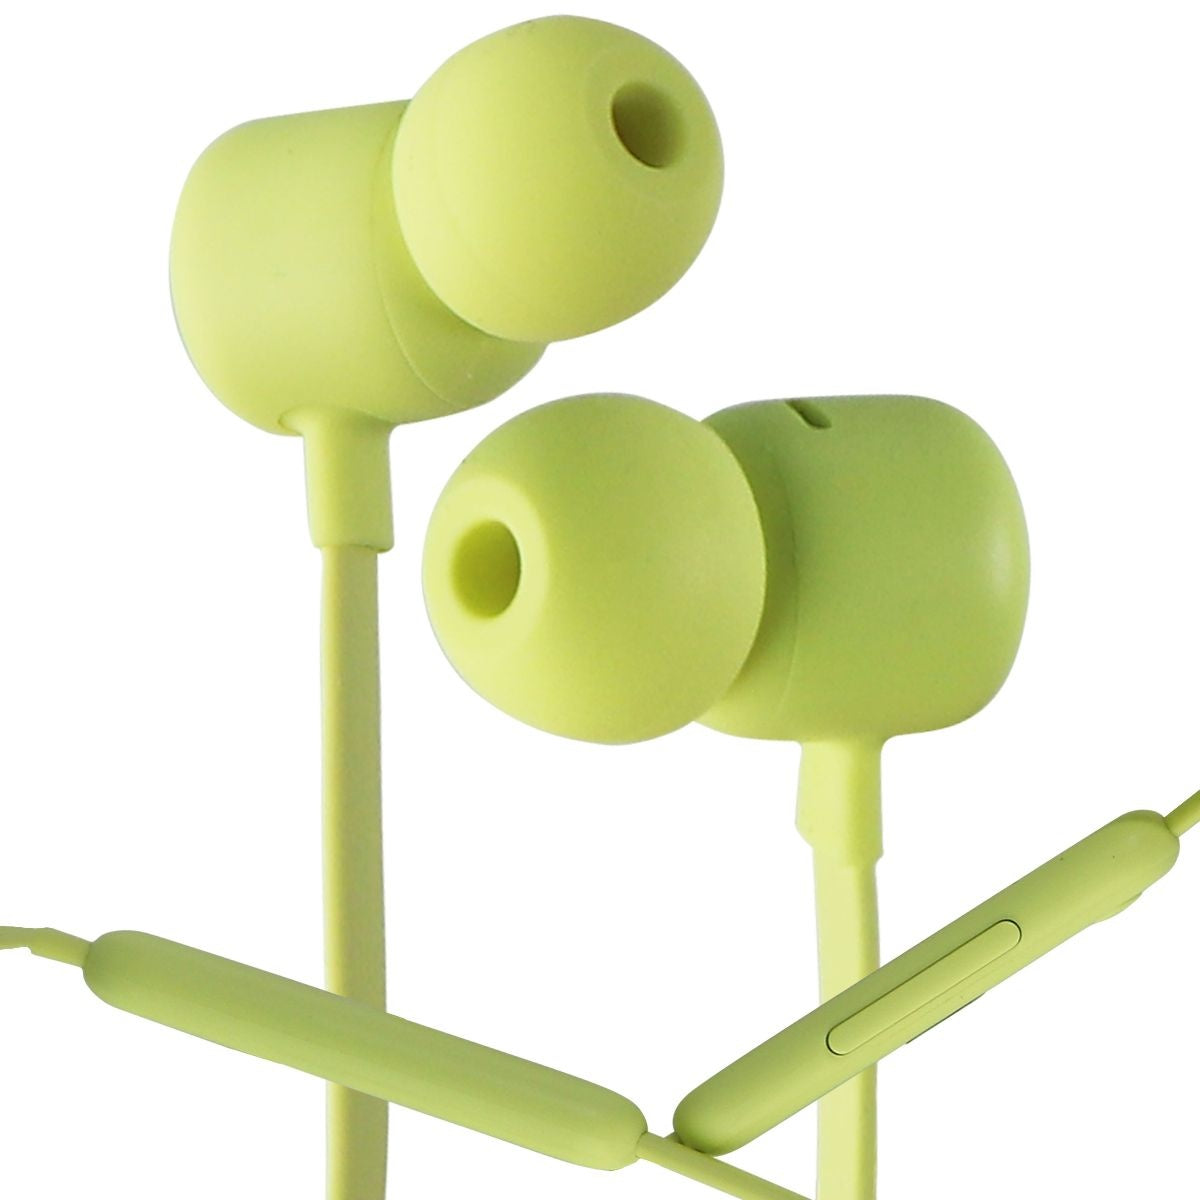 Beats Flex Wireless Bluetooth Neckband Earbuds - Yuzu Yellow Portable Audio - Headphones Beats    - Simple Cell Bulk Wholesale Pricing - USA Seller